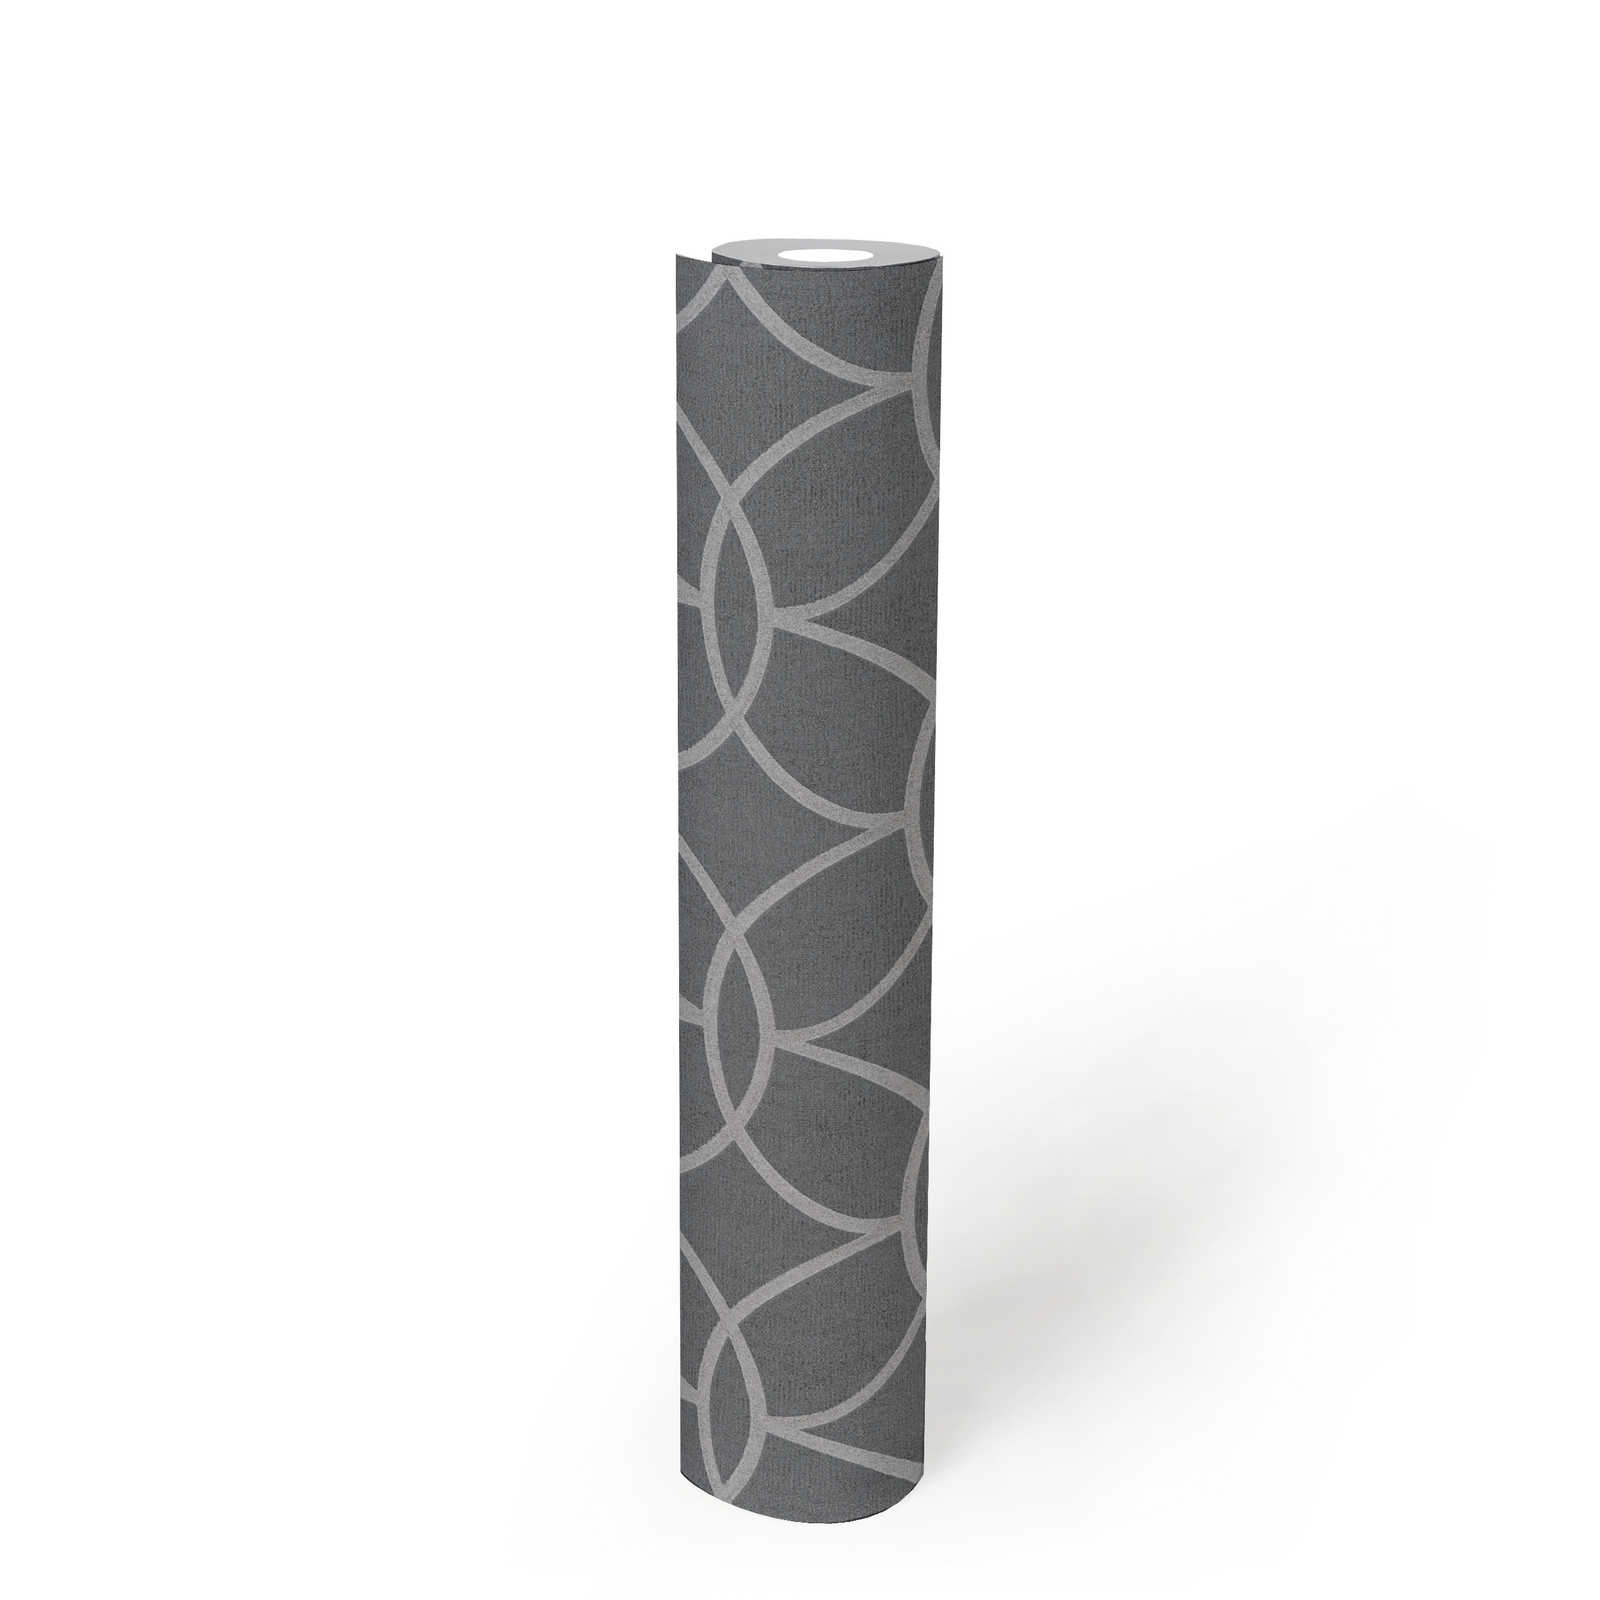             Grey pattern wallpaper with silver metallic pattern & shimmer effect - grey, metallic
        